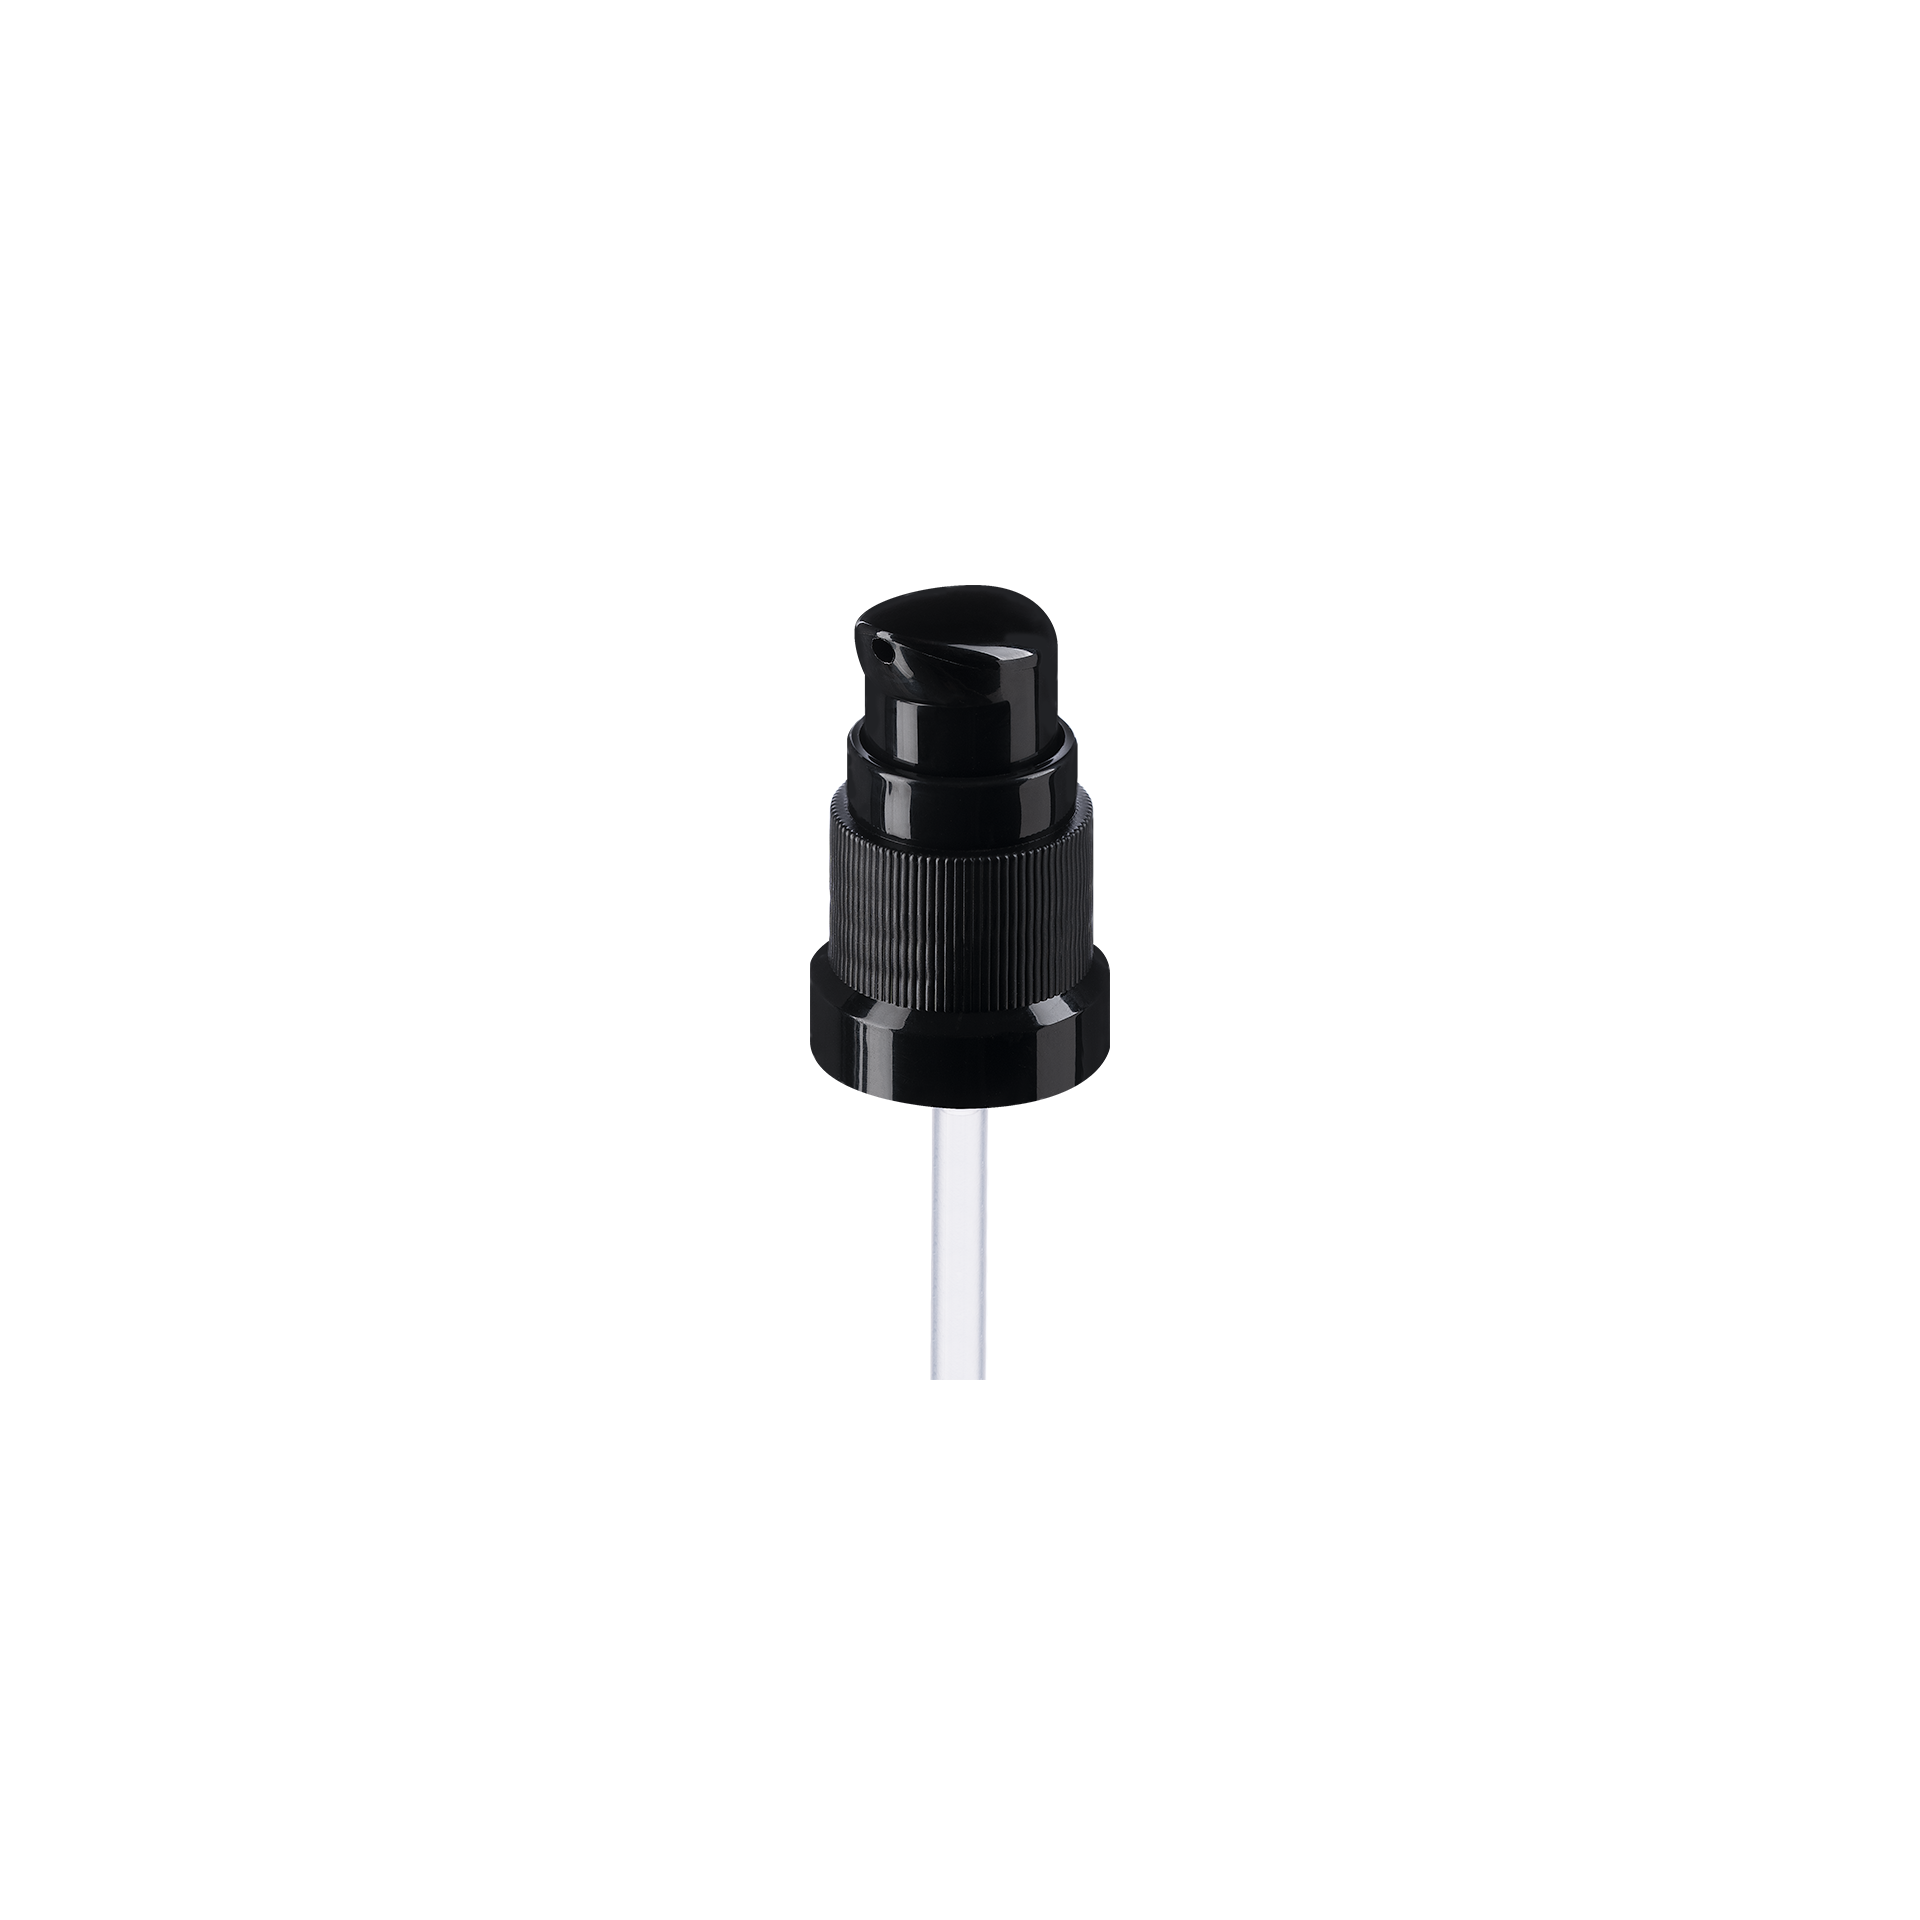 Lotion pump Metropolitan DIN18, PP, black, dose 0.15ml, black security clip (Jasmine 100)